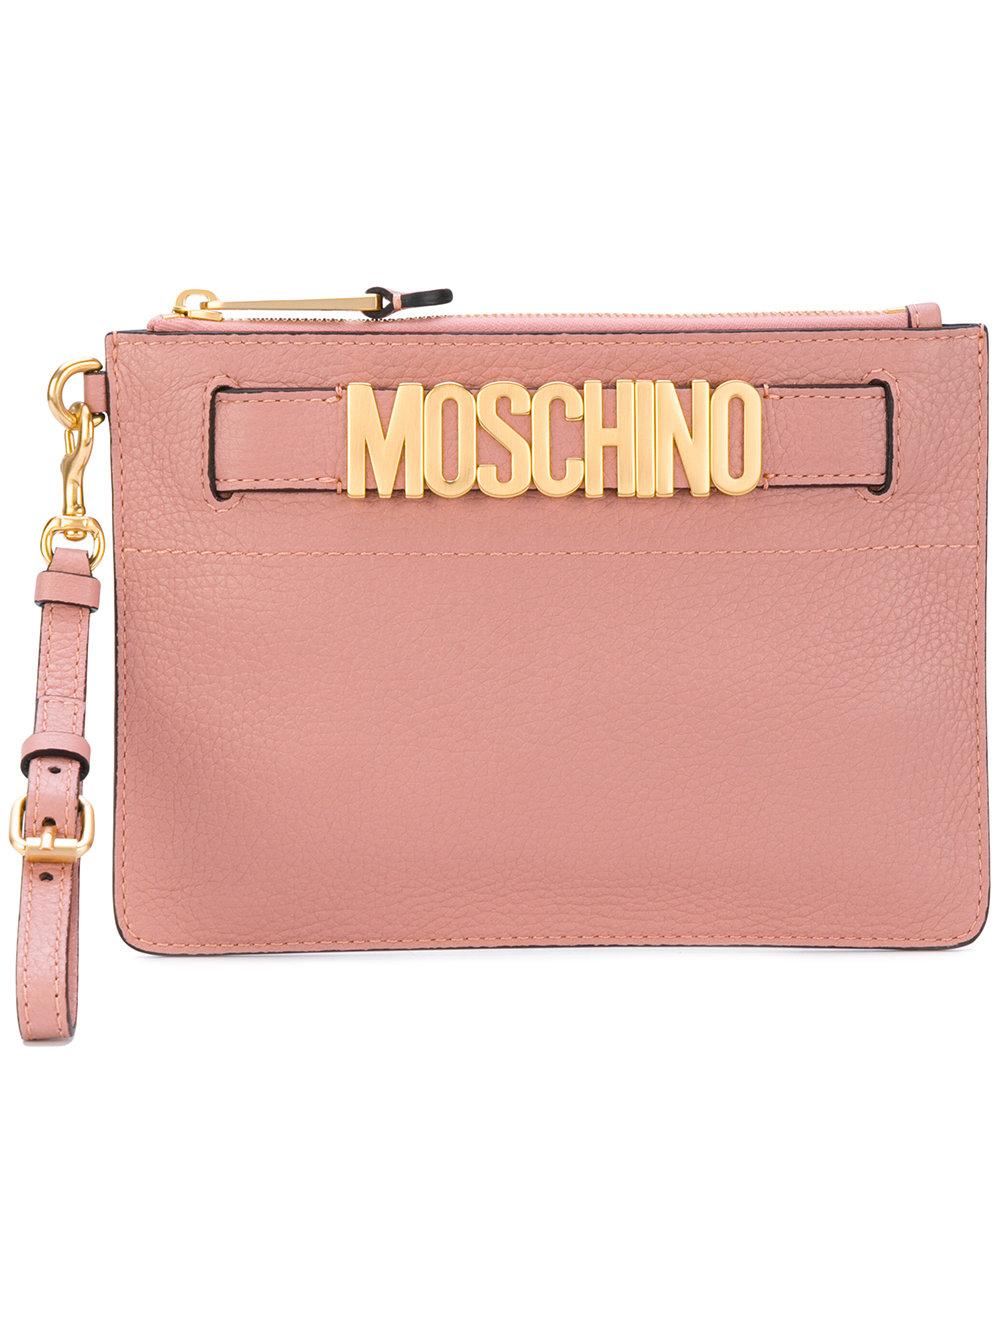 Moschino Logo Strap Clutch in Pink | Lyst